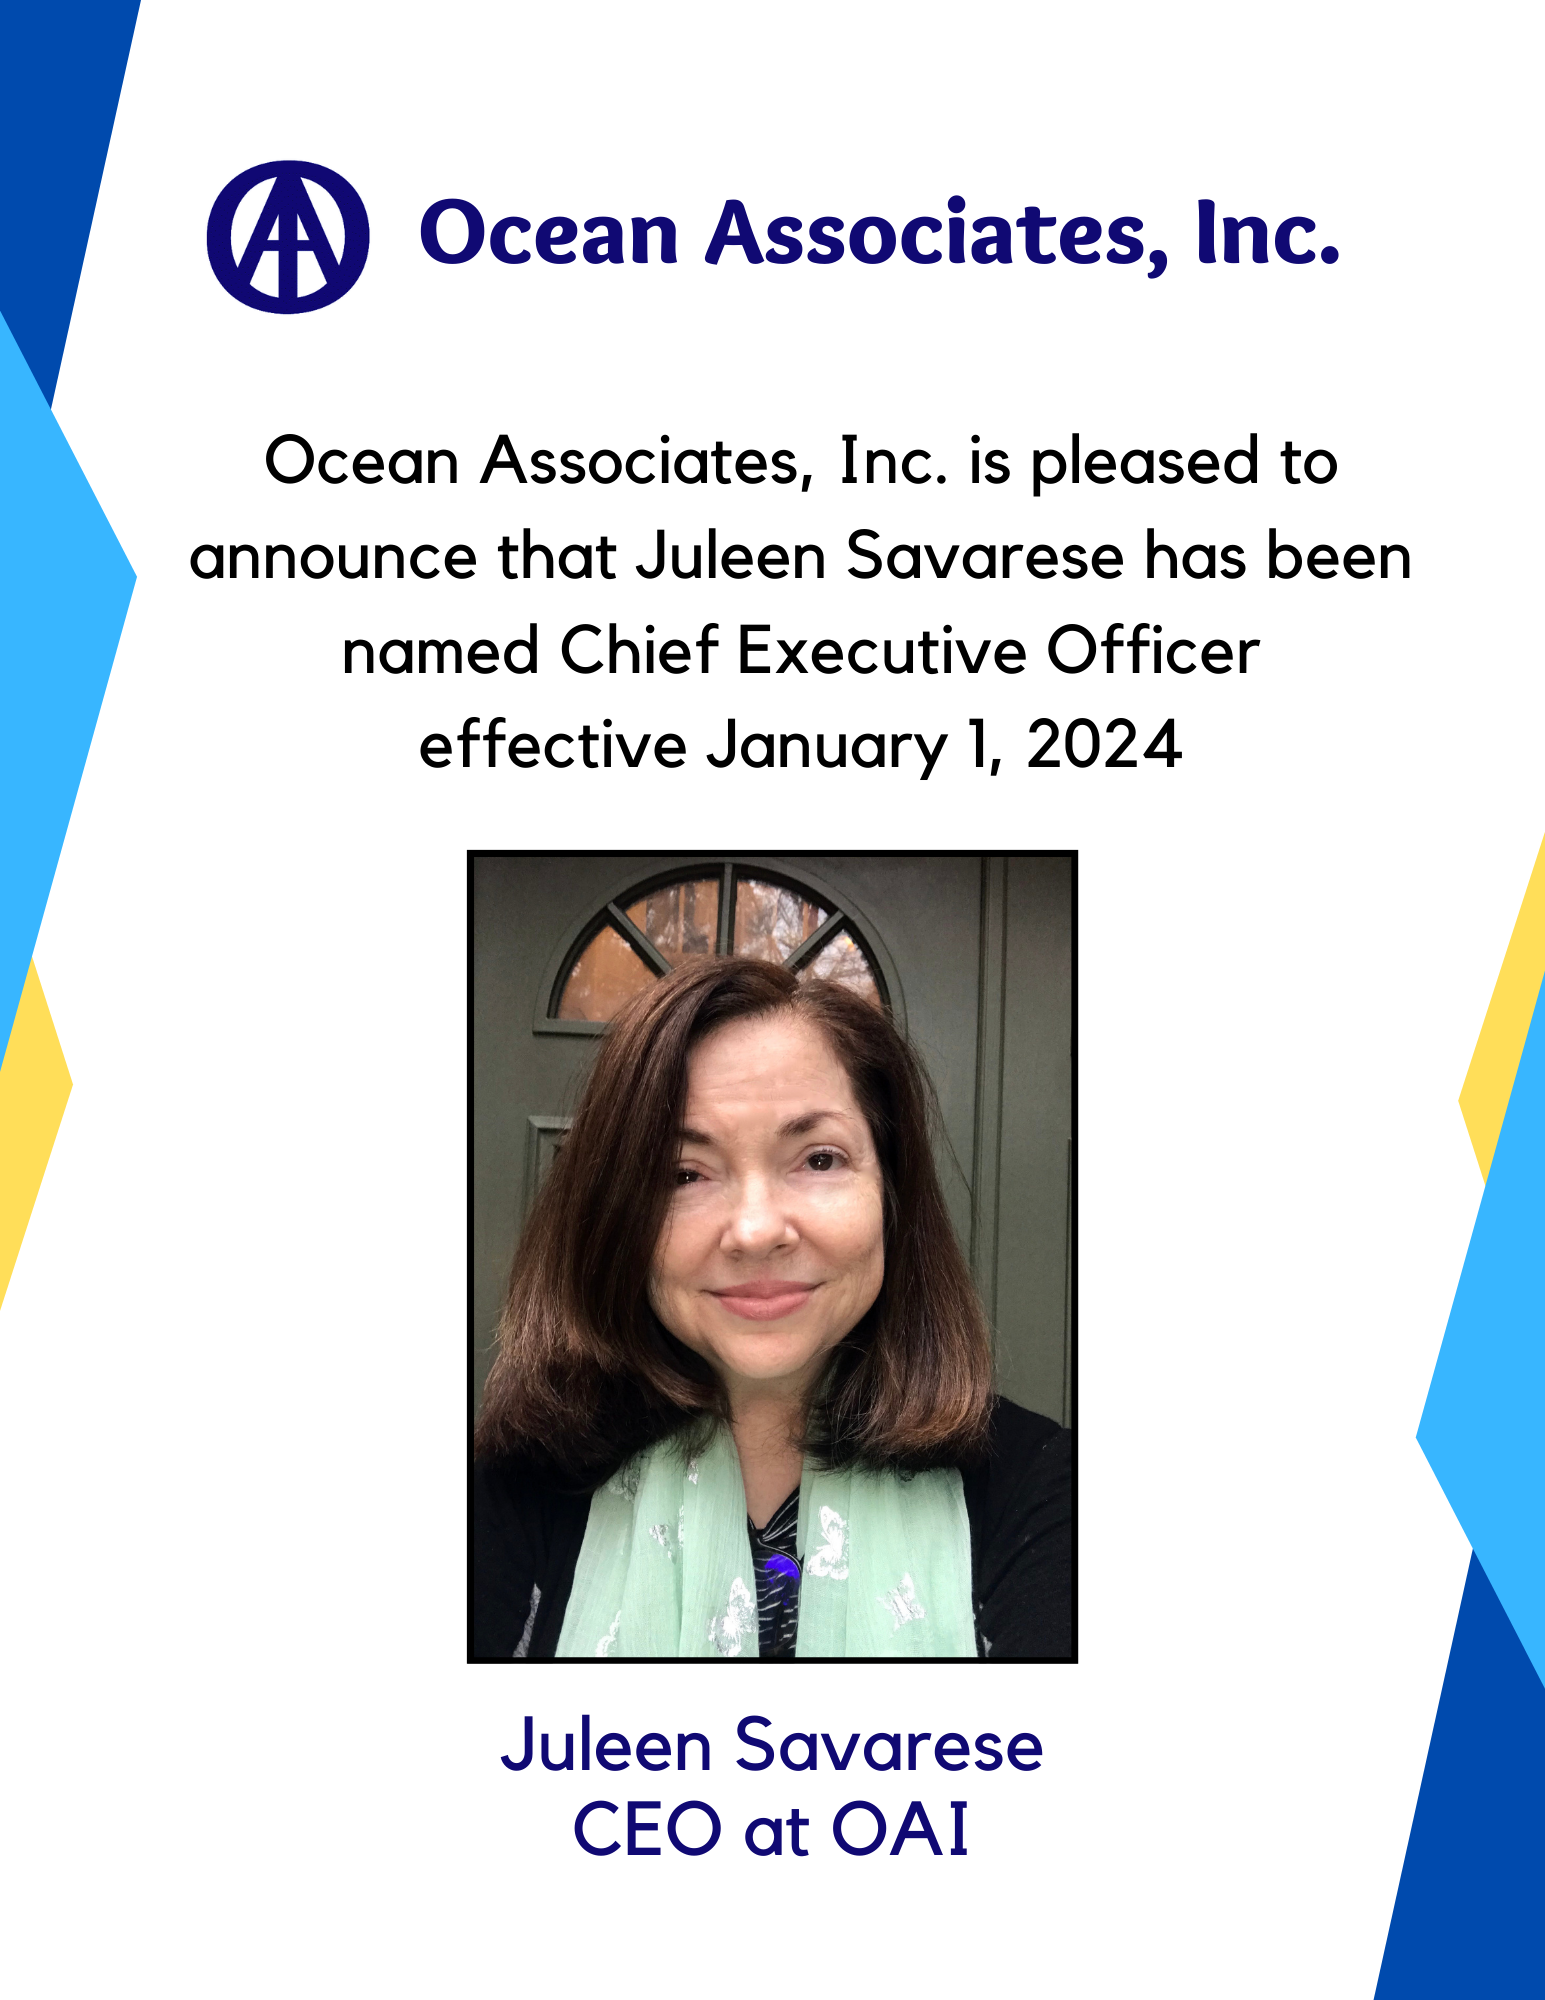 OAI Announces New CEO Juleen Savarese